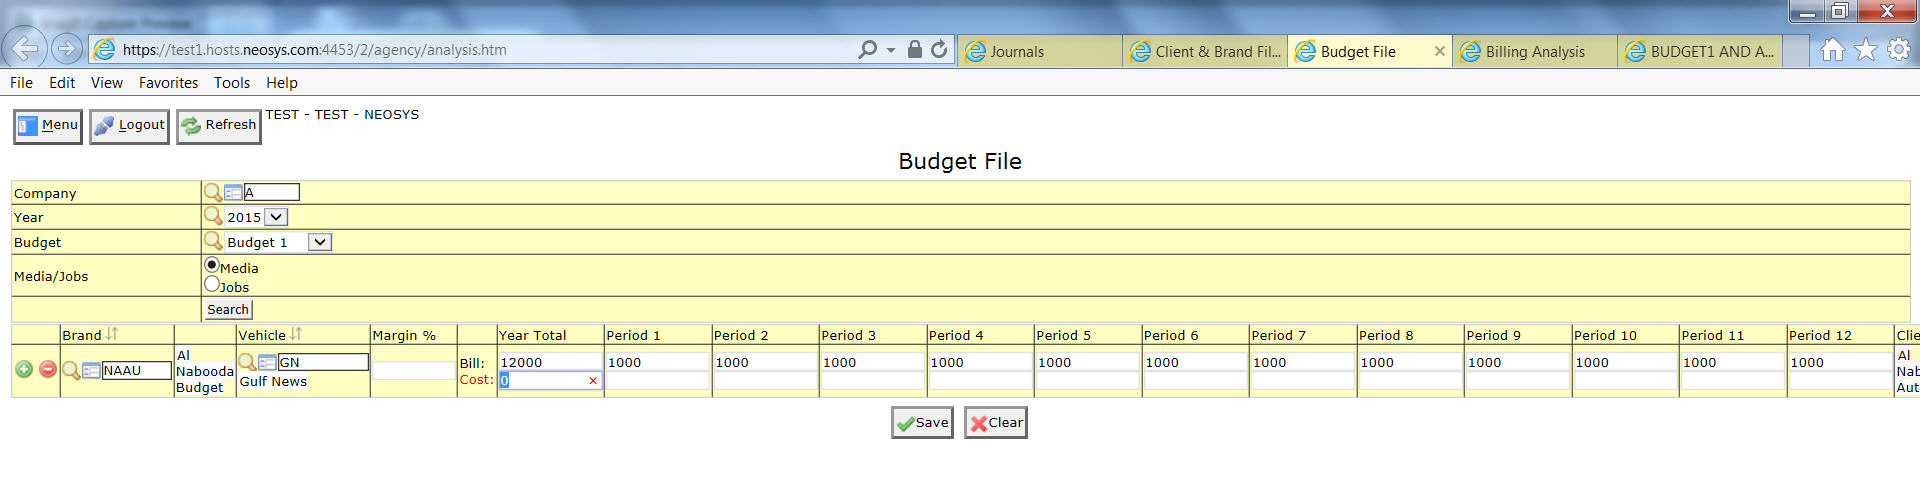 File:Budget file per client.jpg